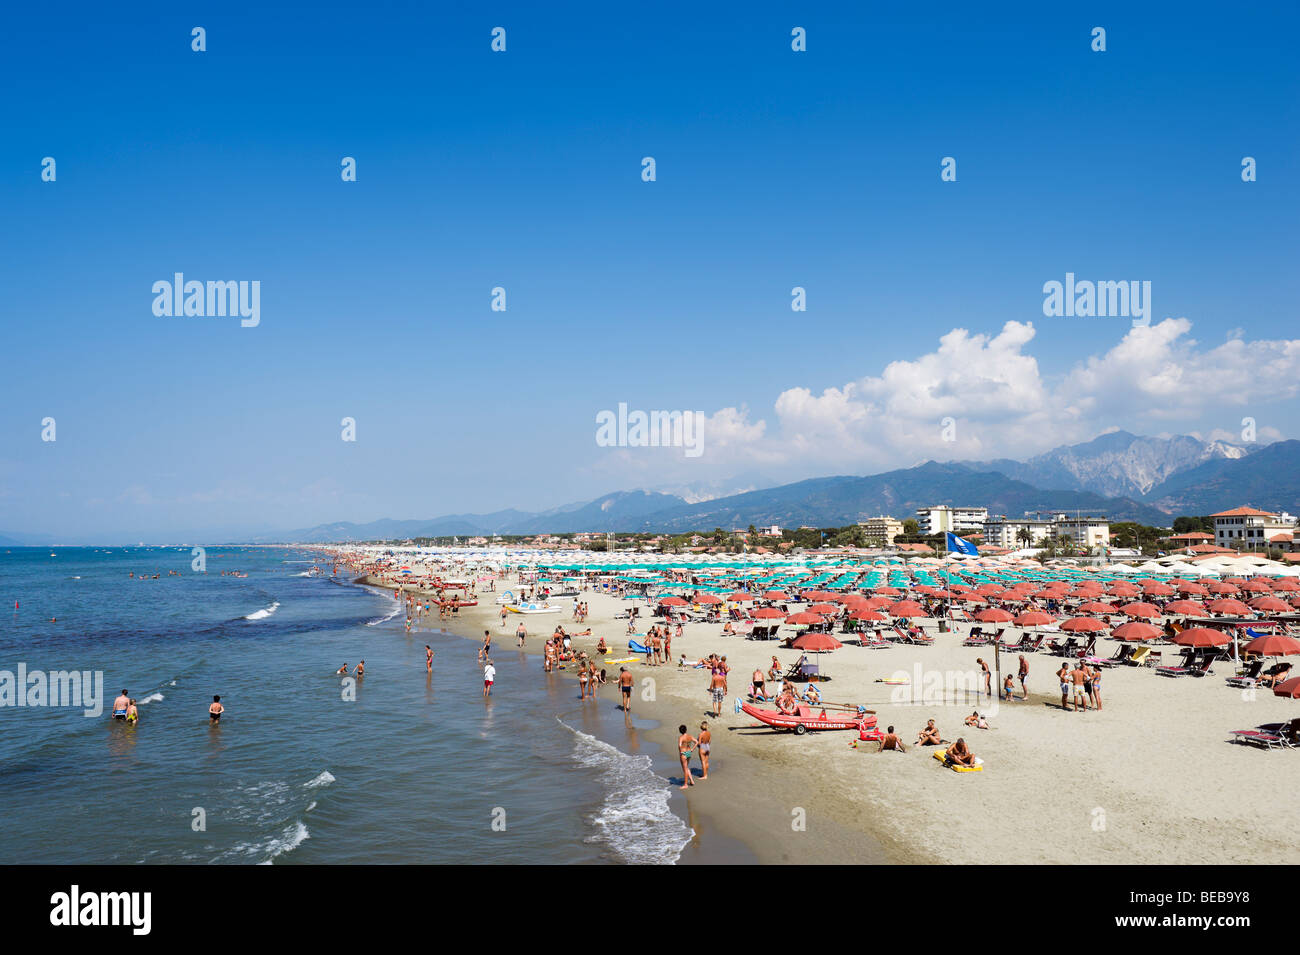 Beach at Marina di Pietrasanta with the town and mountains behind, Tuscan Riviera, Tuscany, Italy Stock Photo